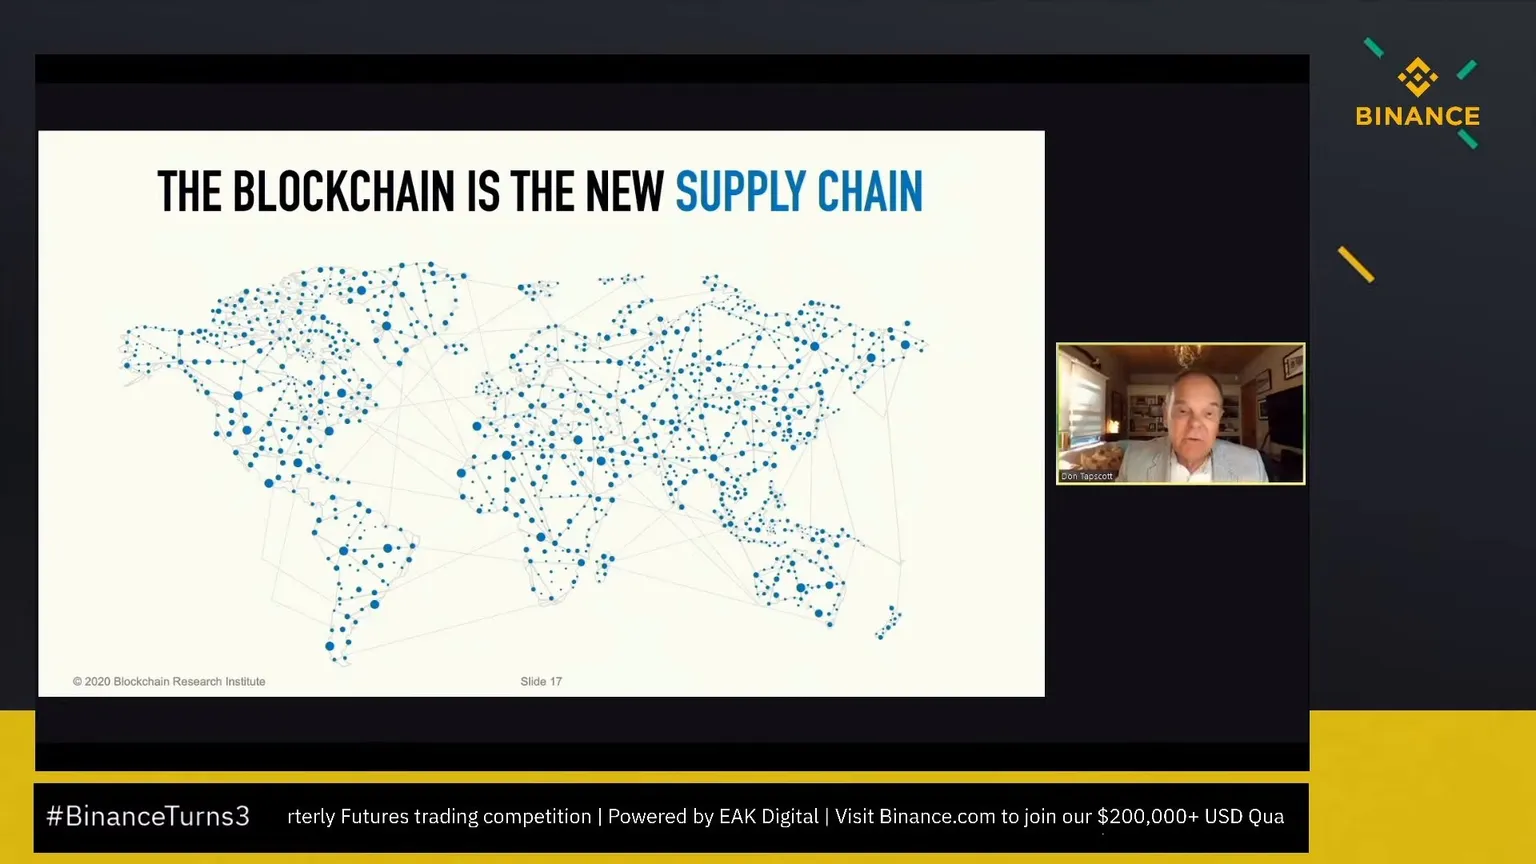 Blockchain ya está impactando positivamente en el mundo, dice Don Tapscott. Imagen: Binance